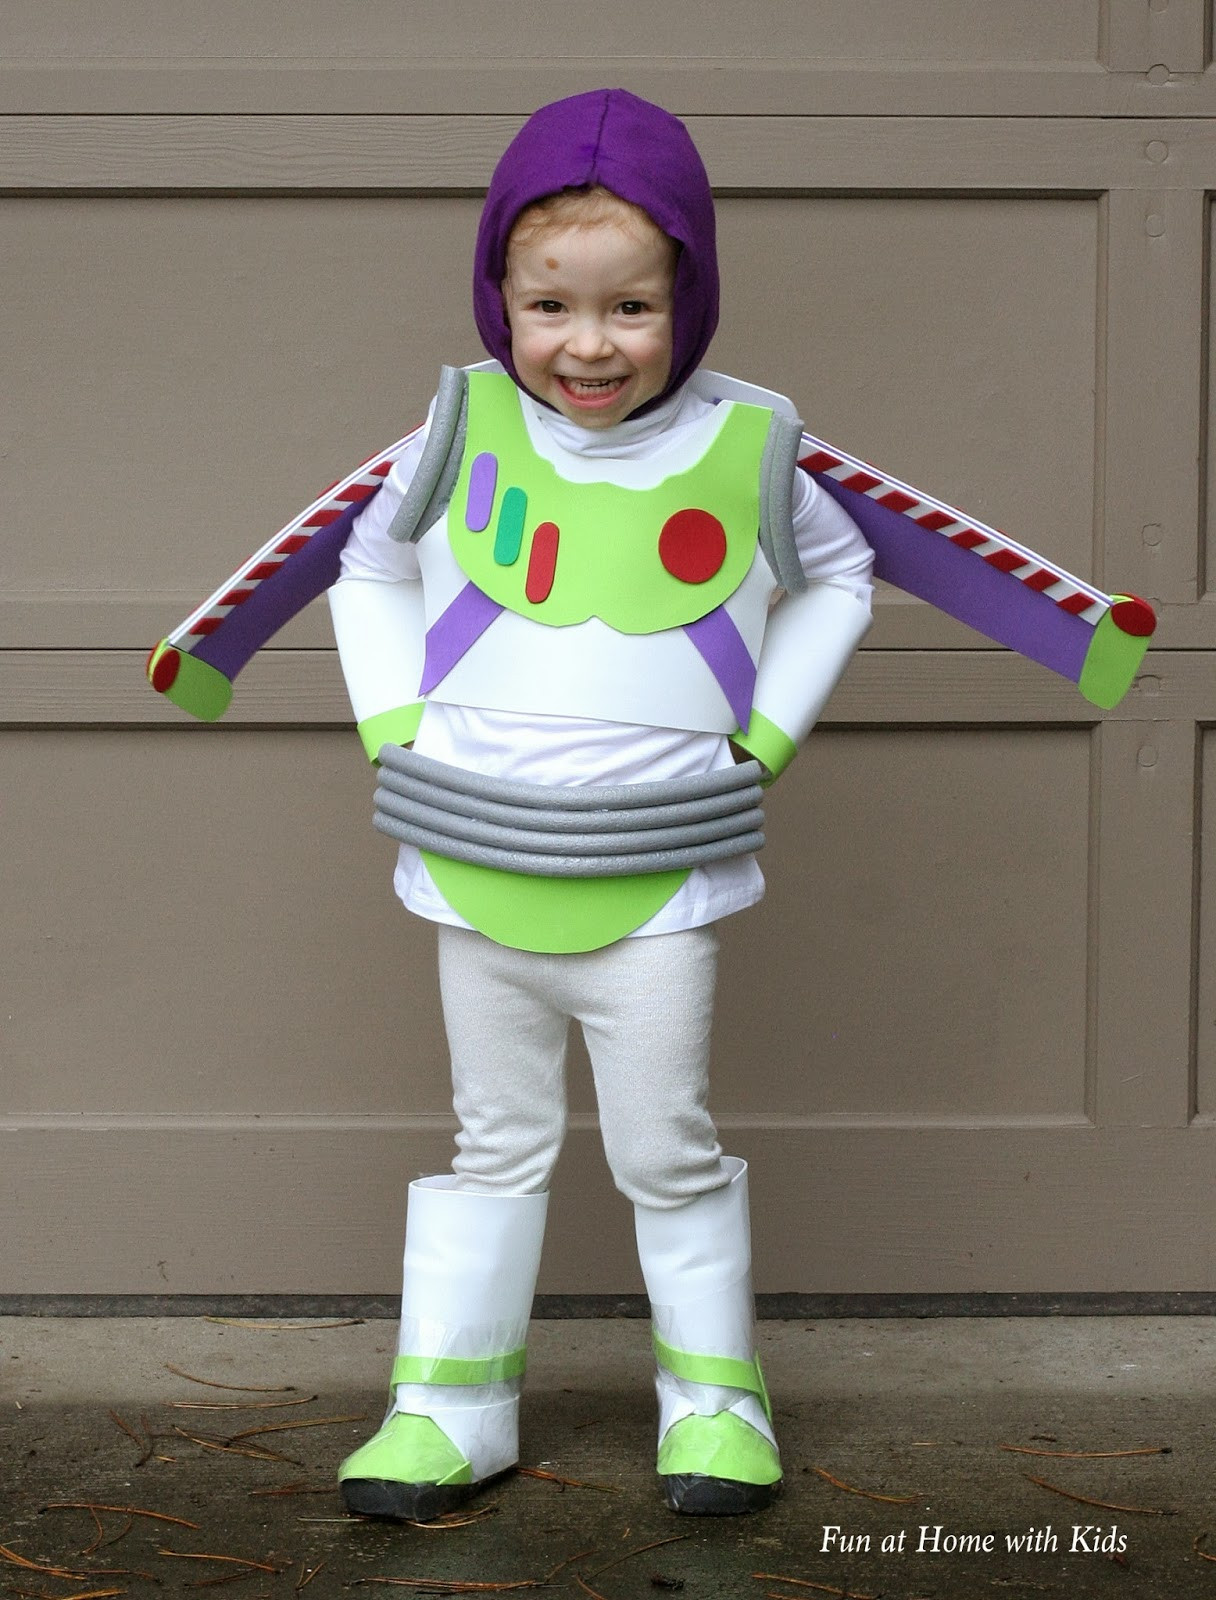 Best ideas about DIY Boy Halloween Costumes
. Save or Pin 25 DIY Halloween Costumes For Little Boys Now.